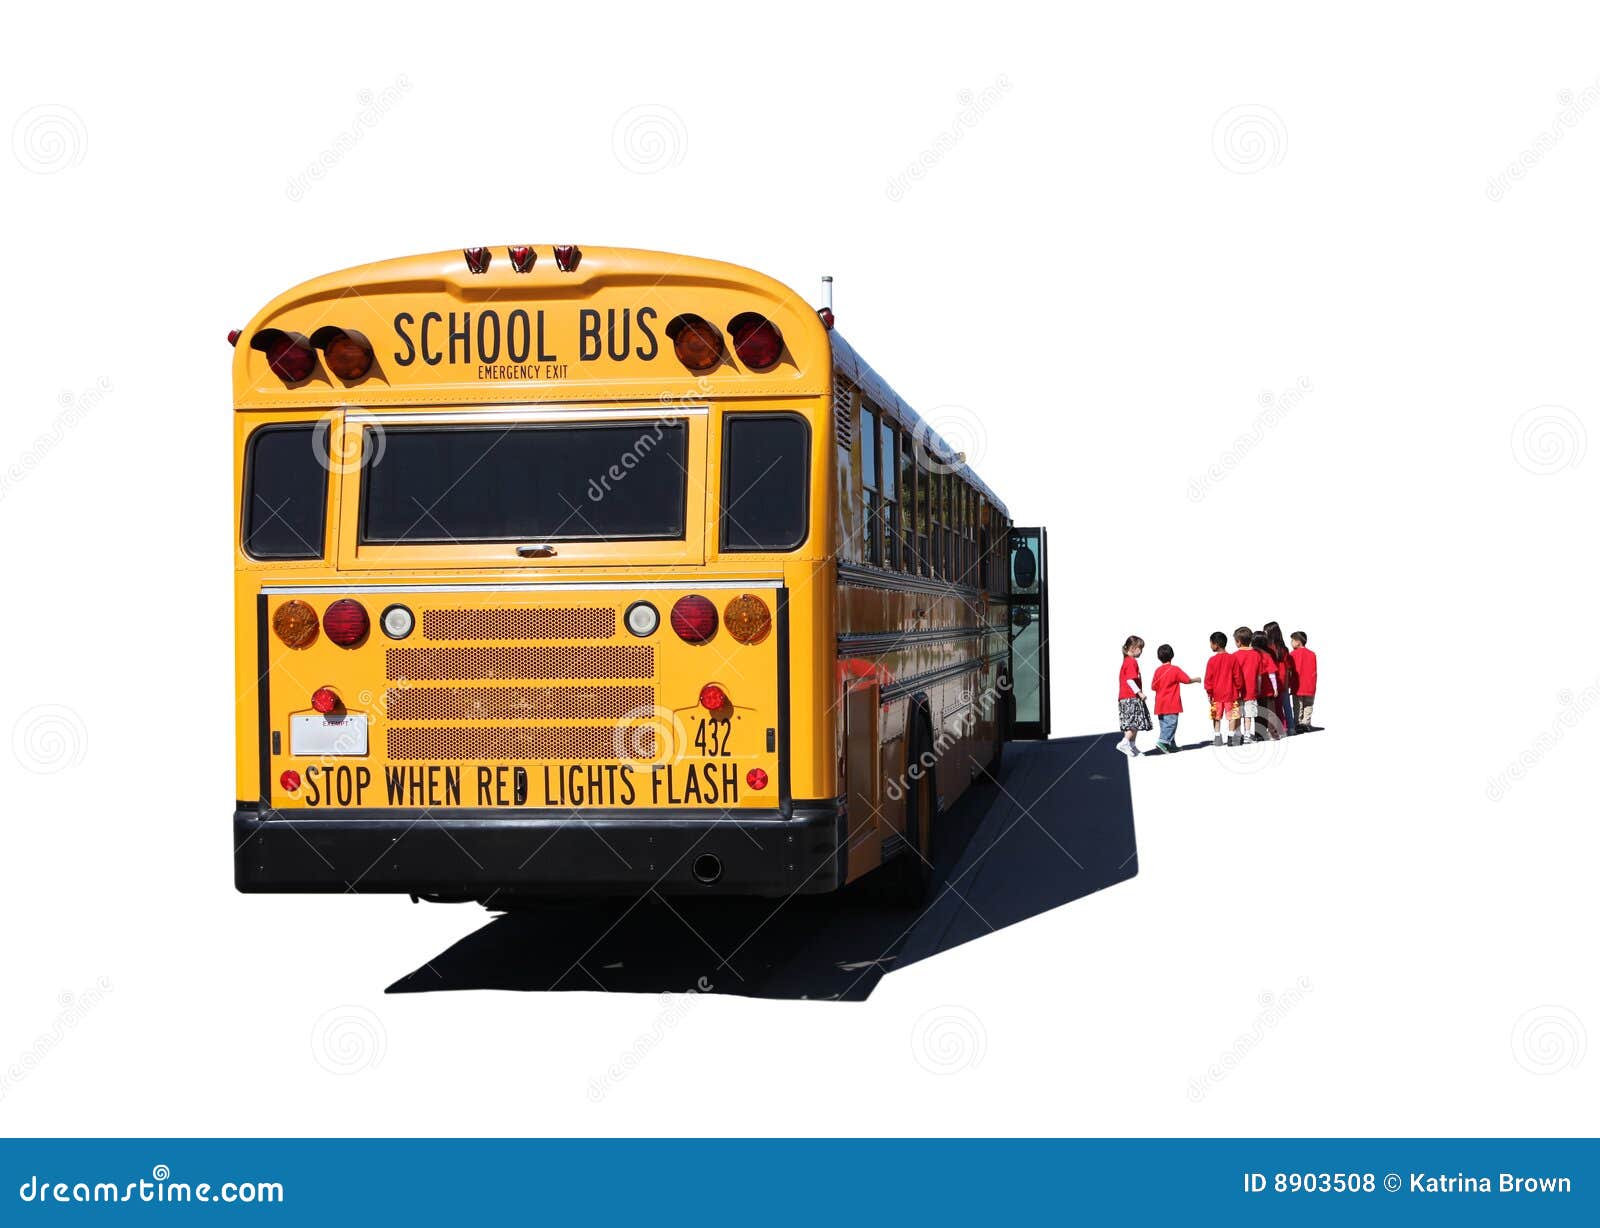 school aged children departing a school bus